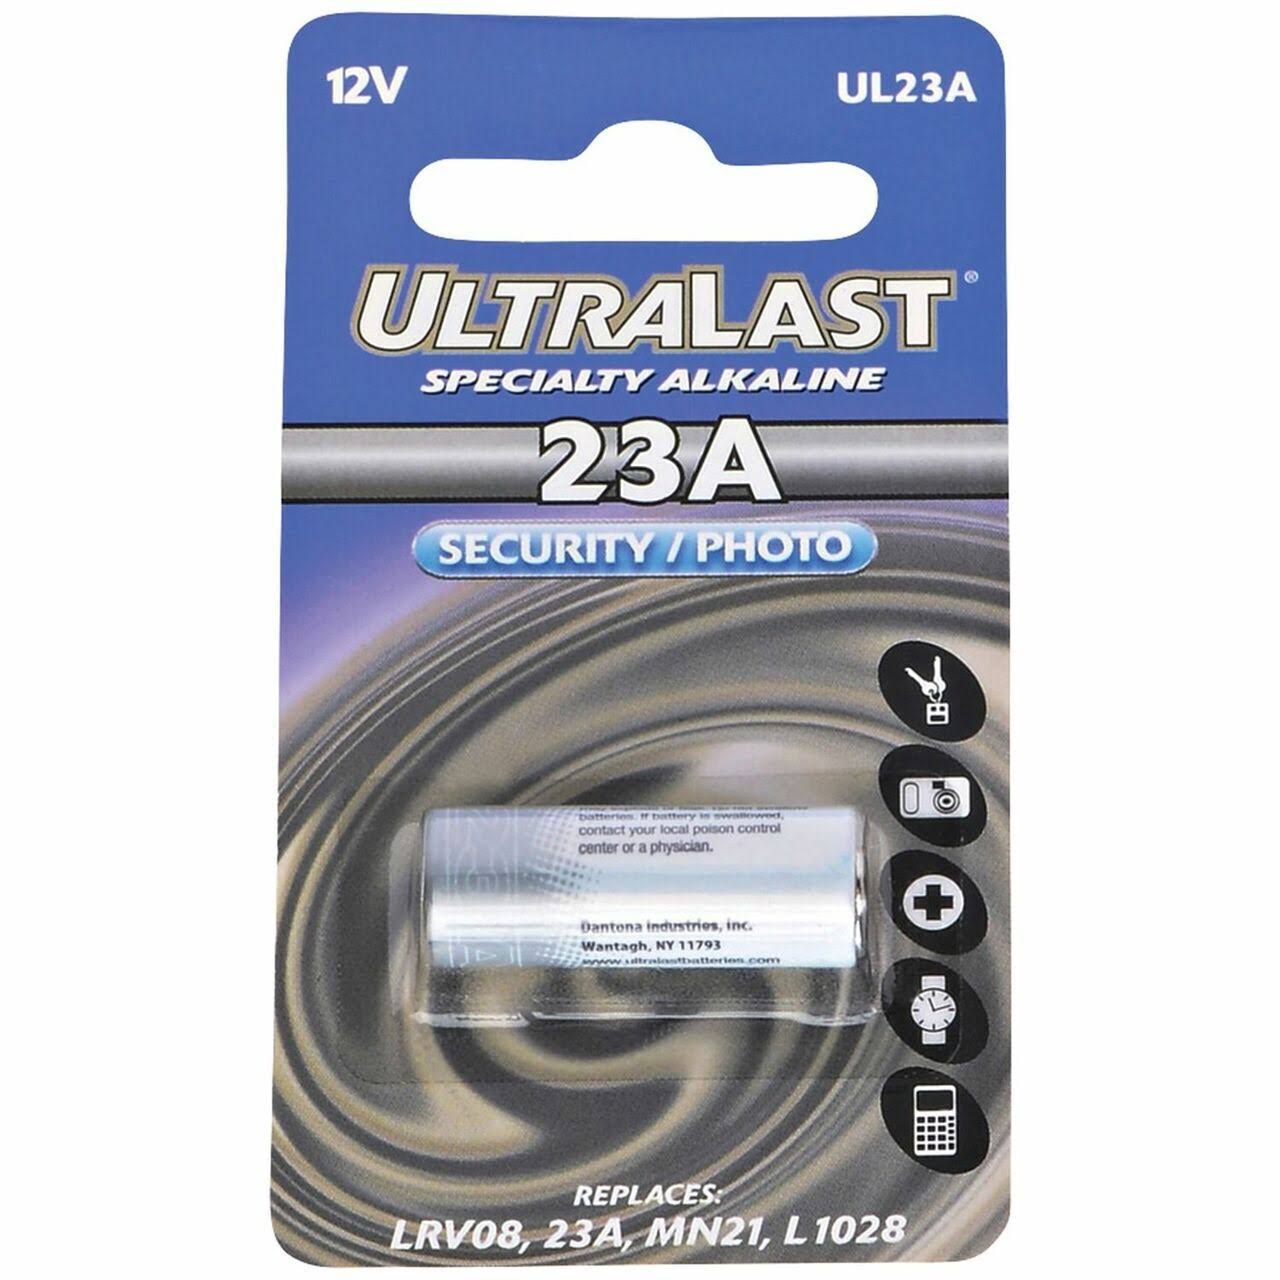 UltraLast UL23A Standard Alkaline Camera Battery - 12V